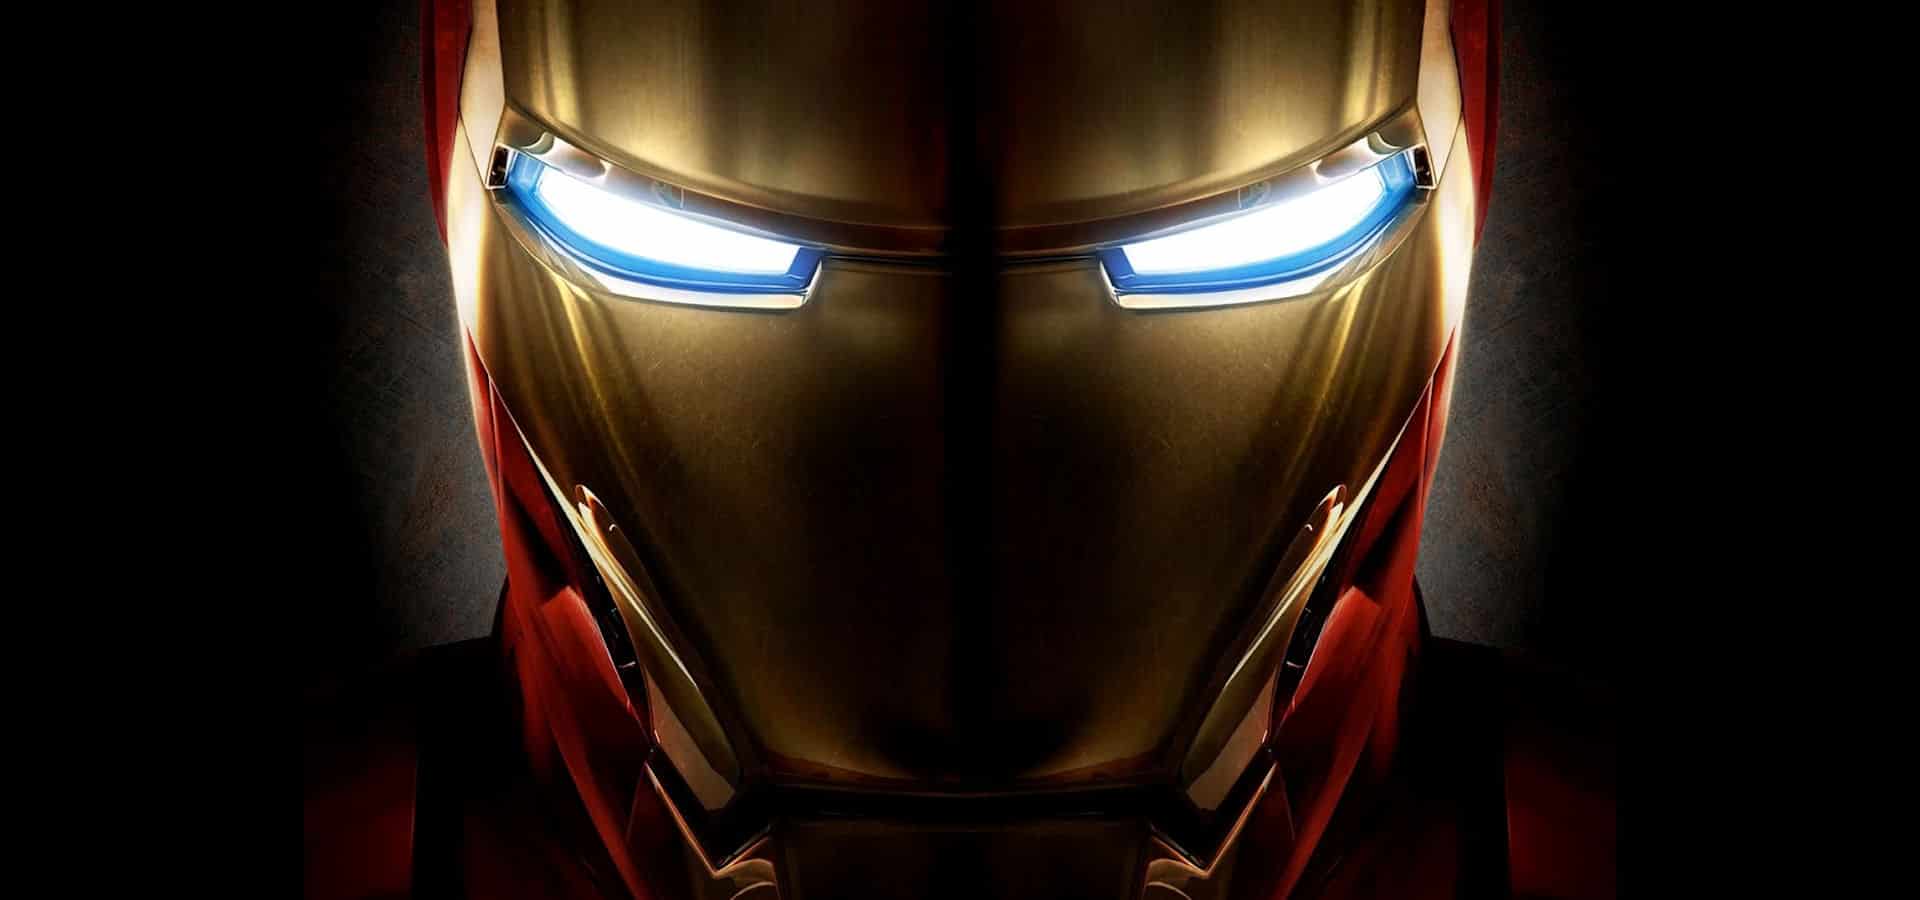 Iron Man 3 Mask Wallpaper